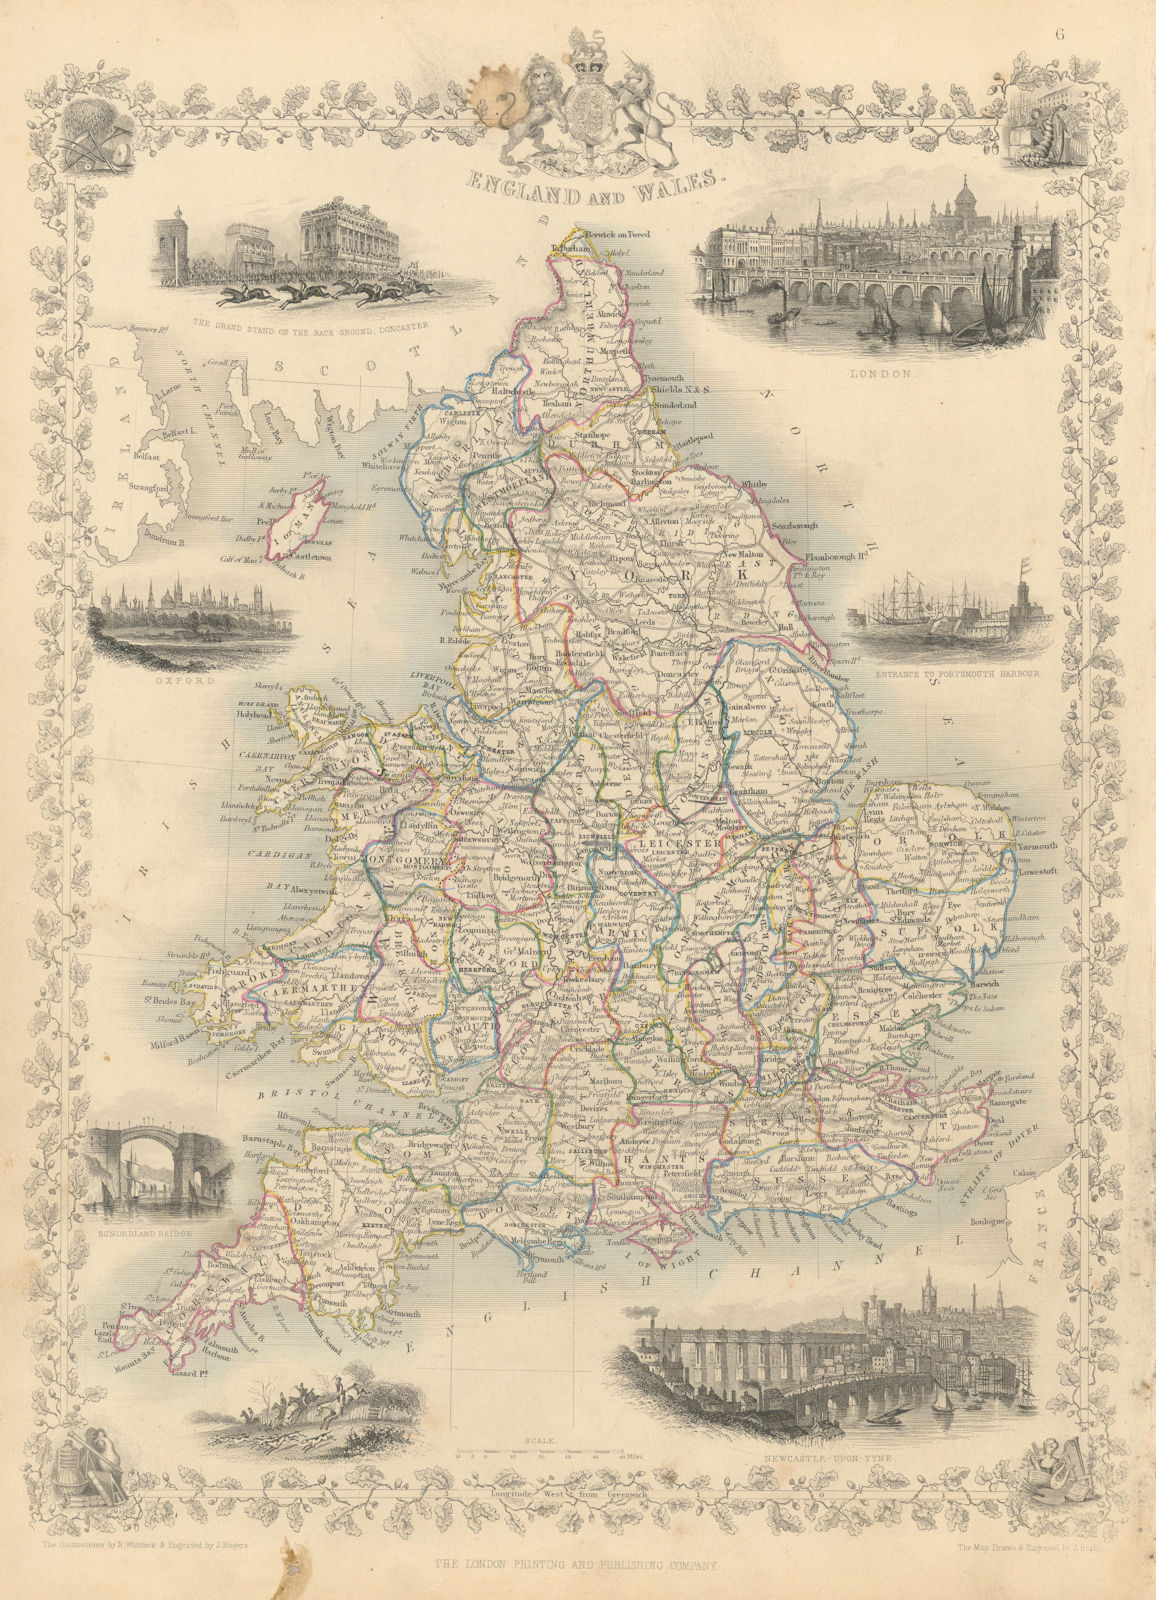 ENGLAND & WALES. London Newcastle Doncaster races views. RAPKIN/TALLIS 1851 map